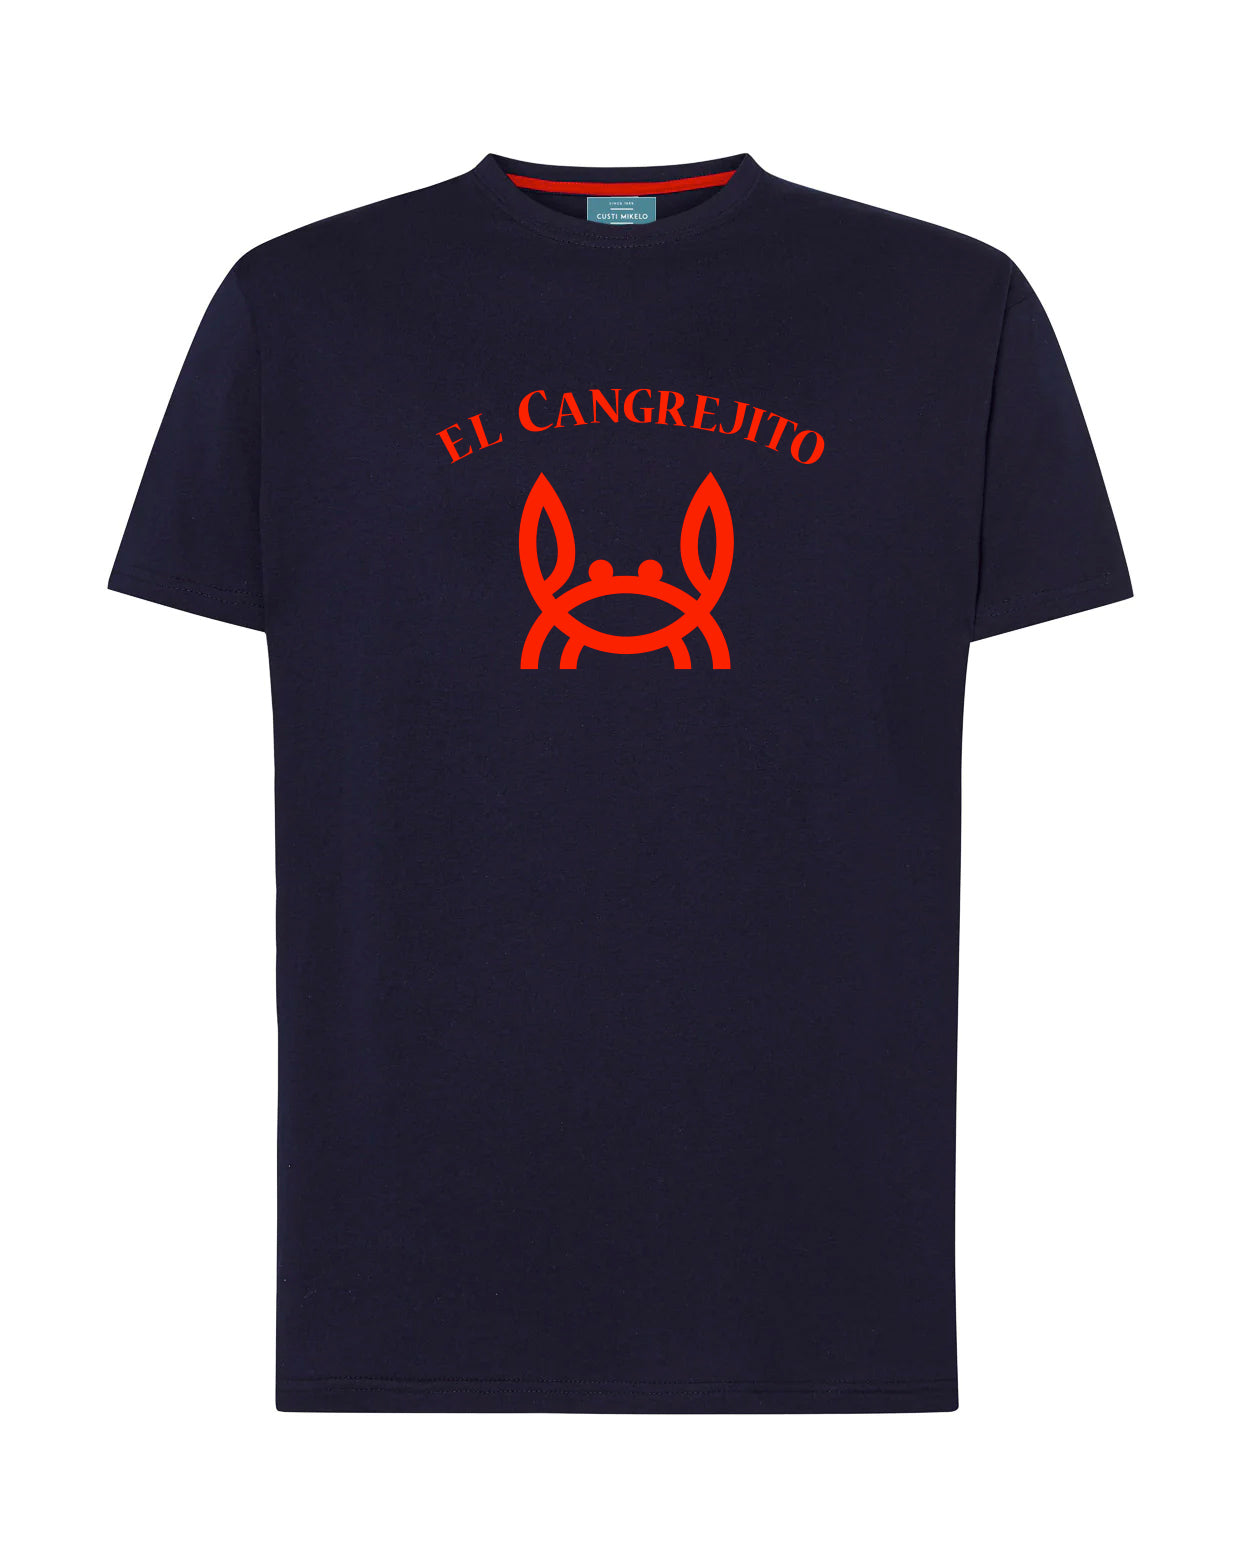 Camiseta cangrejito marino/roja